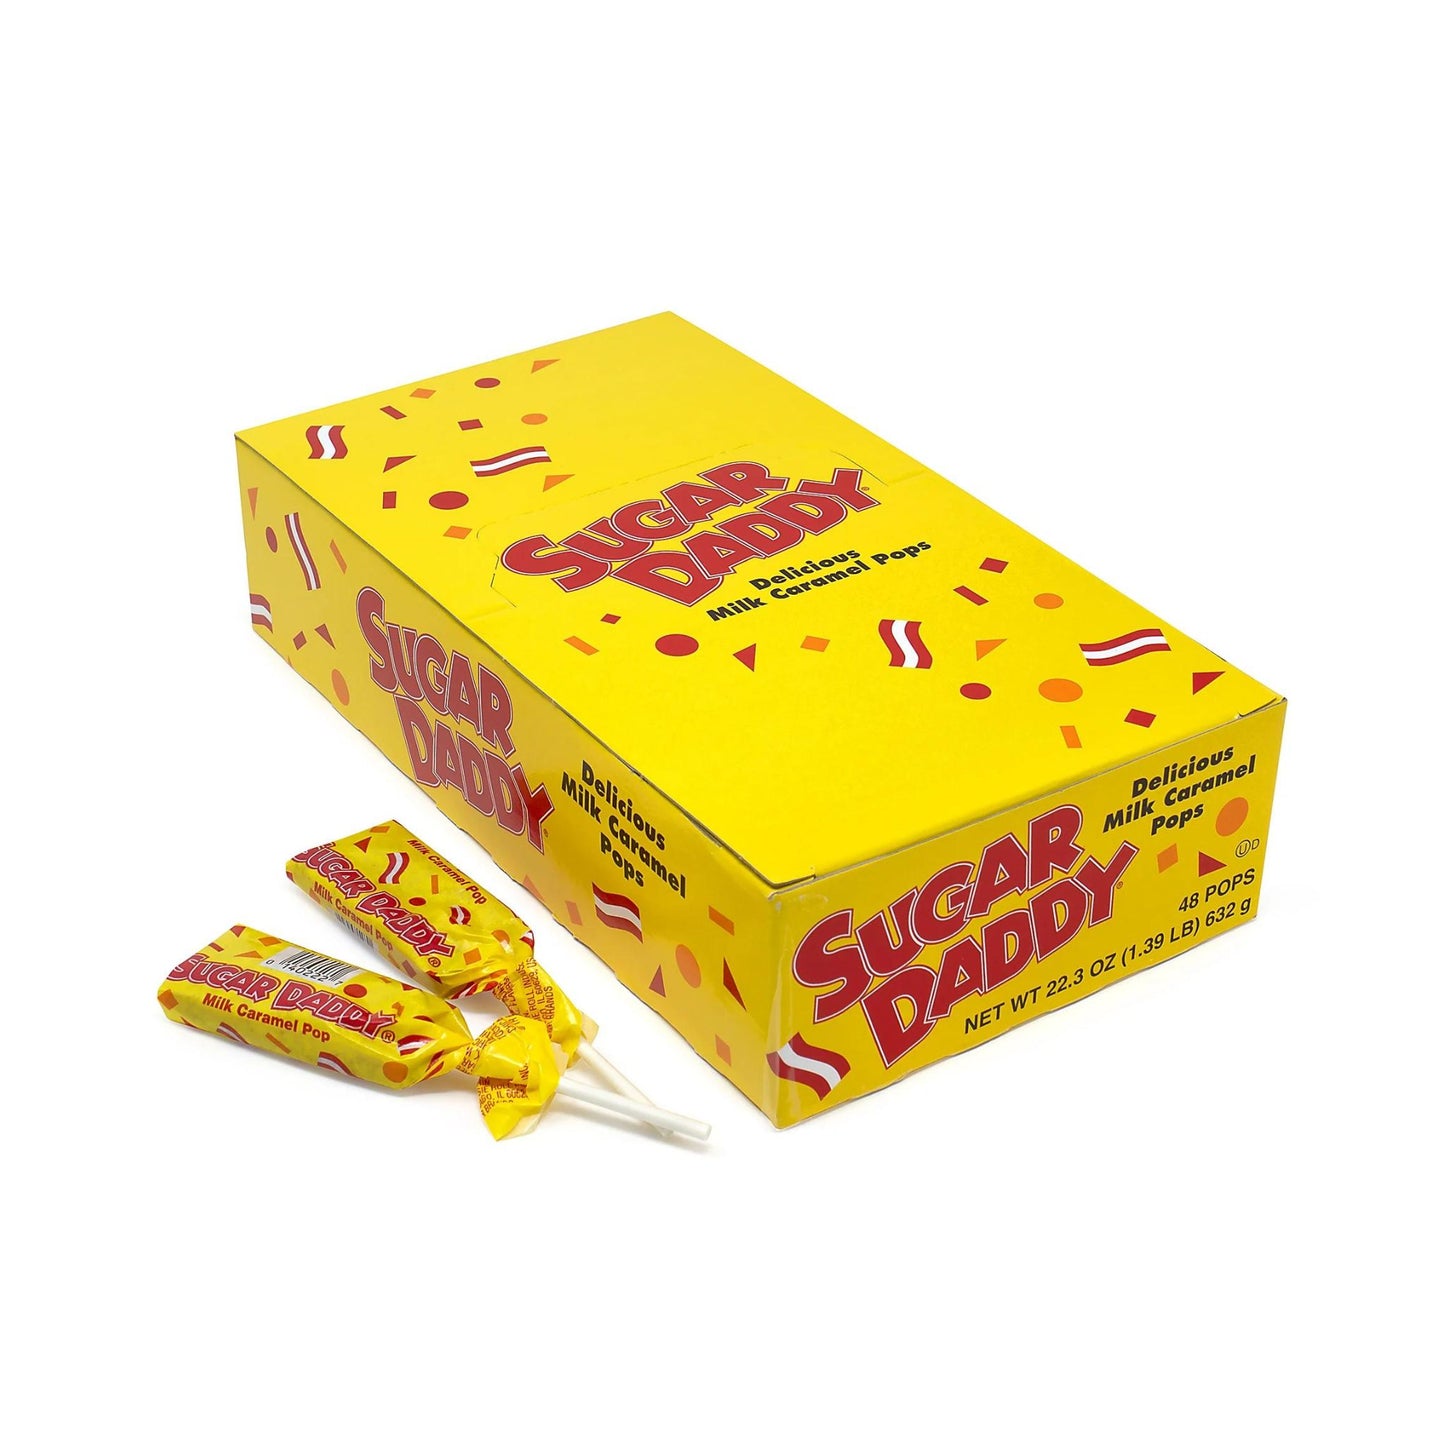 Sugar Daddy Caramel Candy Pops 0.47 Oz. Pack Of 48